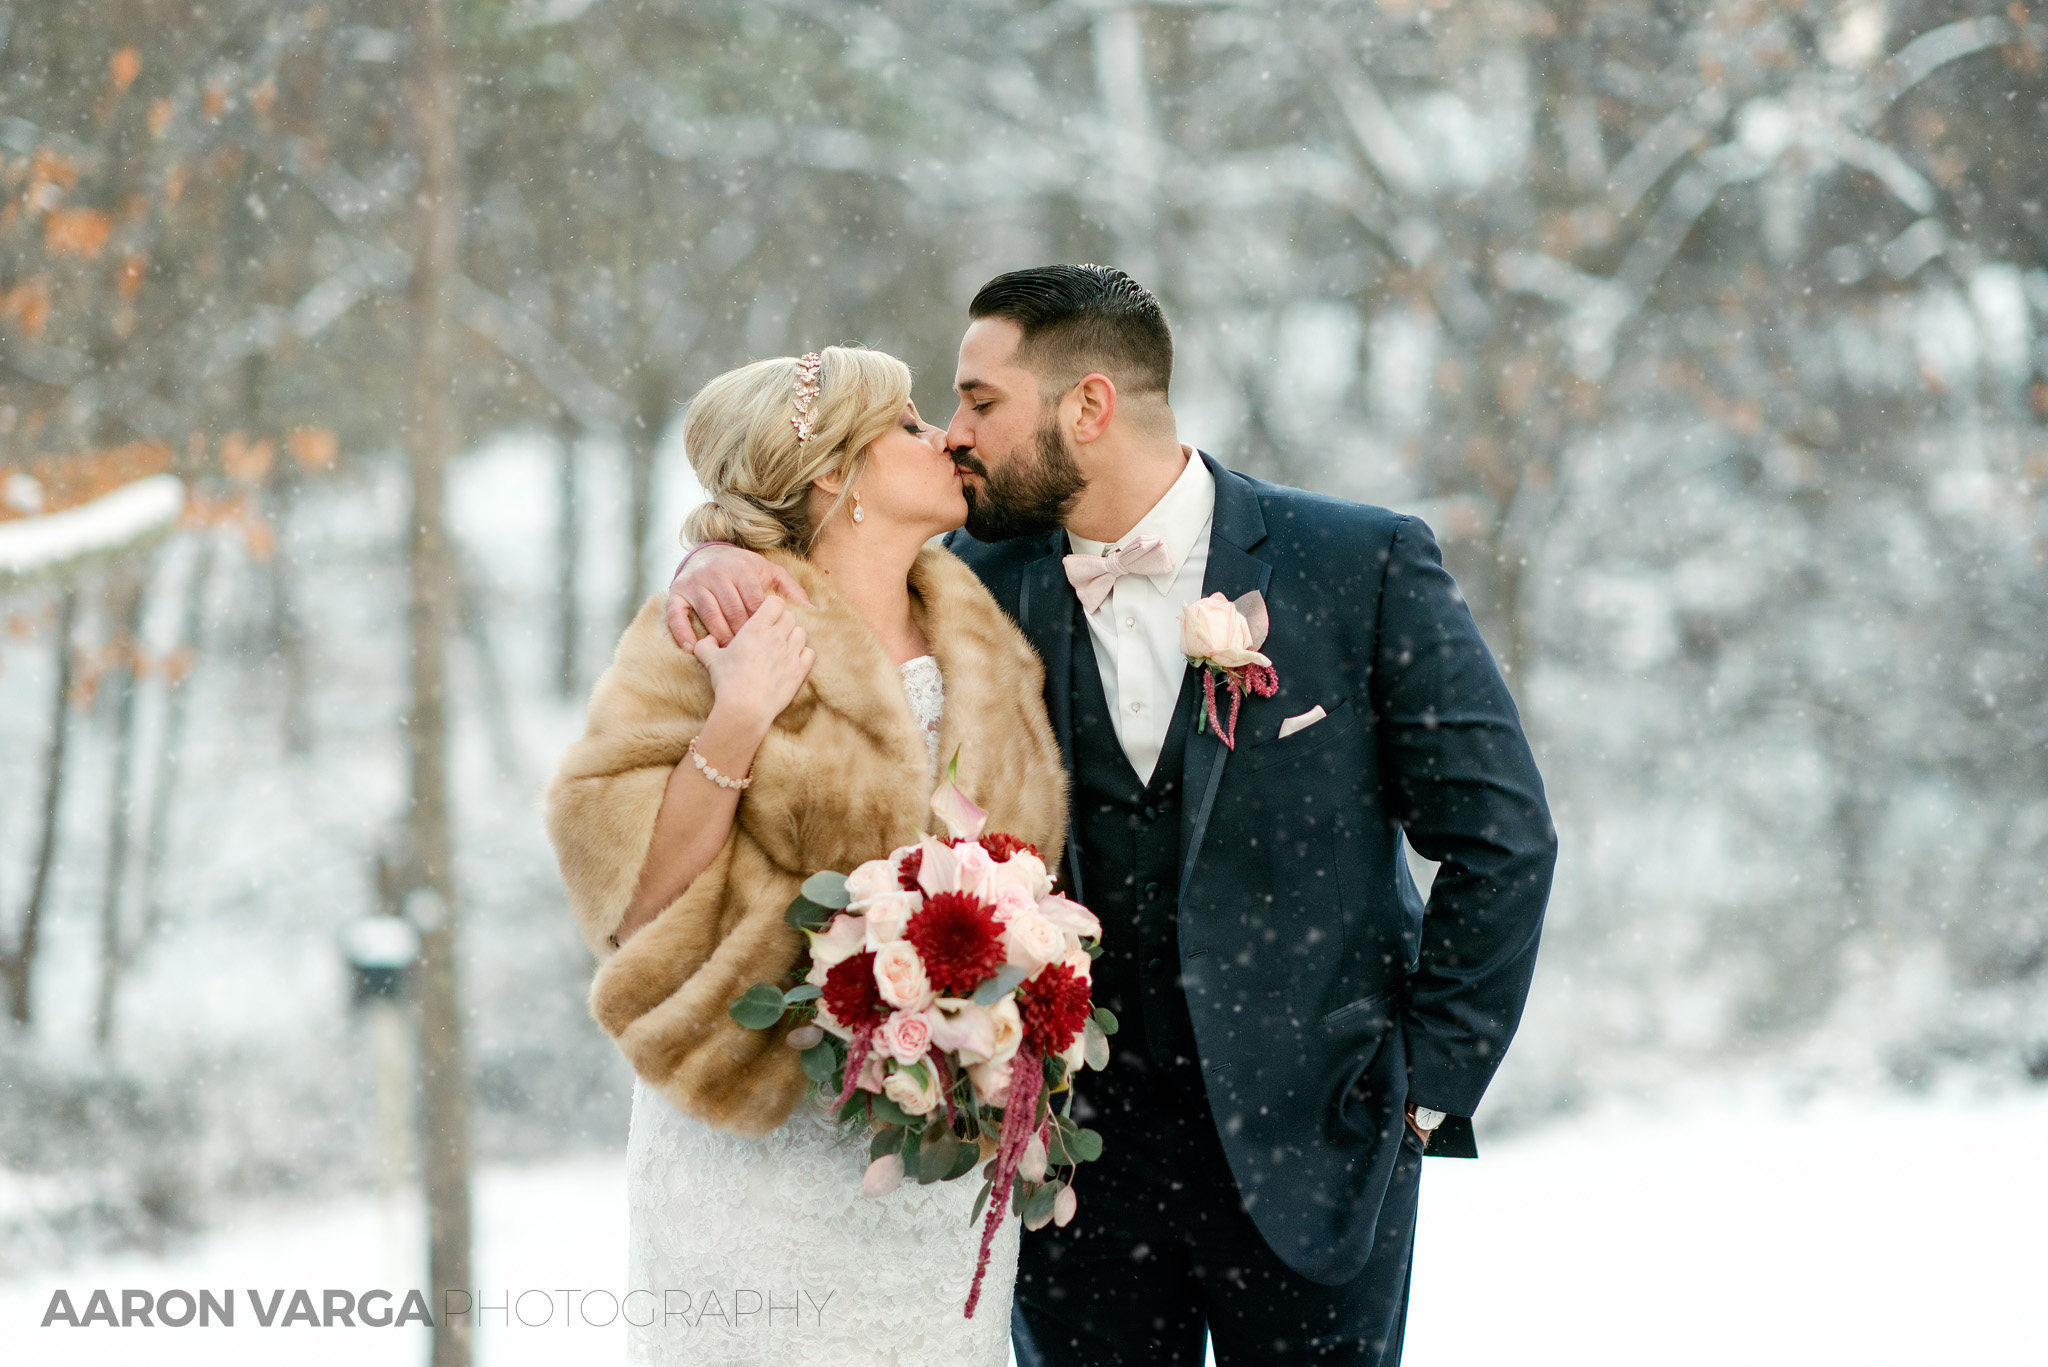 29 brown fur winter wedding - Andrea + Frank | Pittsburgh Airport Marriott Wedding Photos